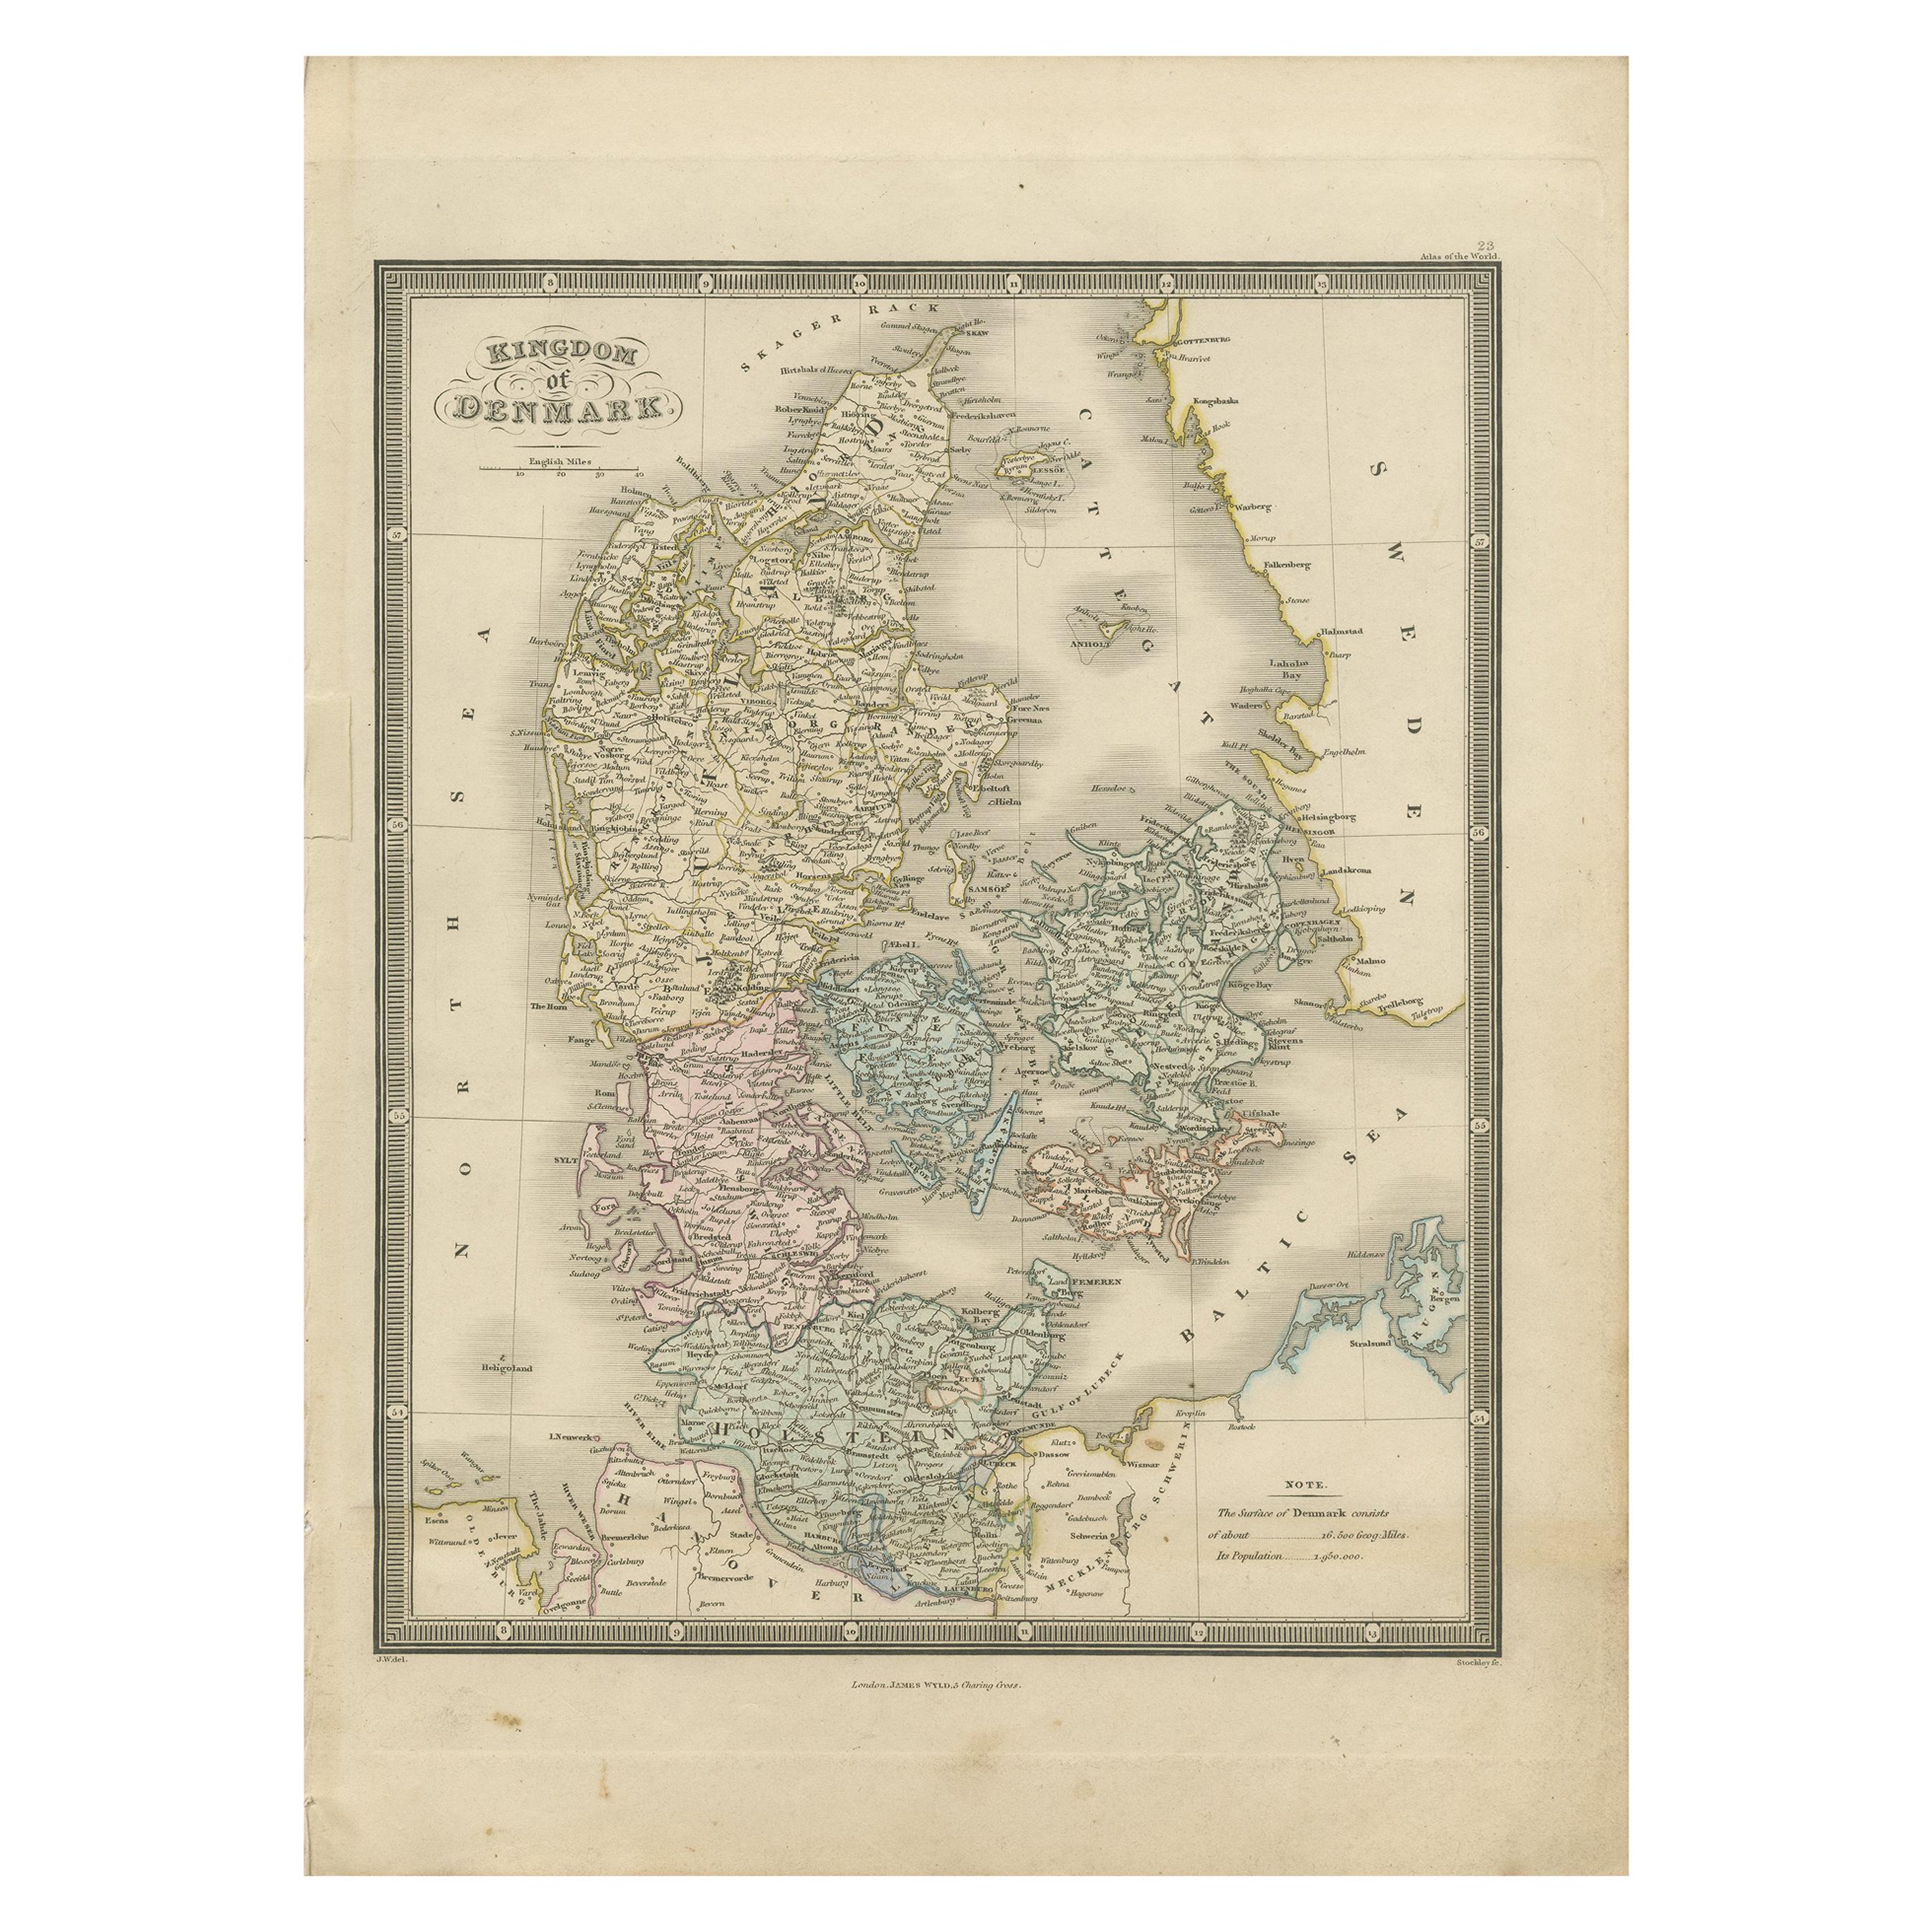 Carte ancienne du Royaume-Uni du Danemark par Wyld (1845)